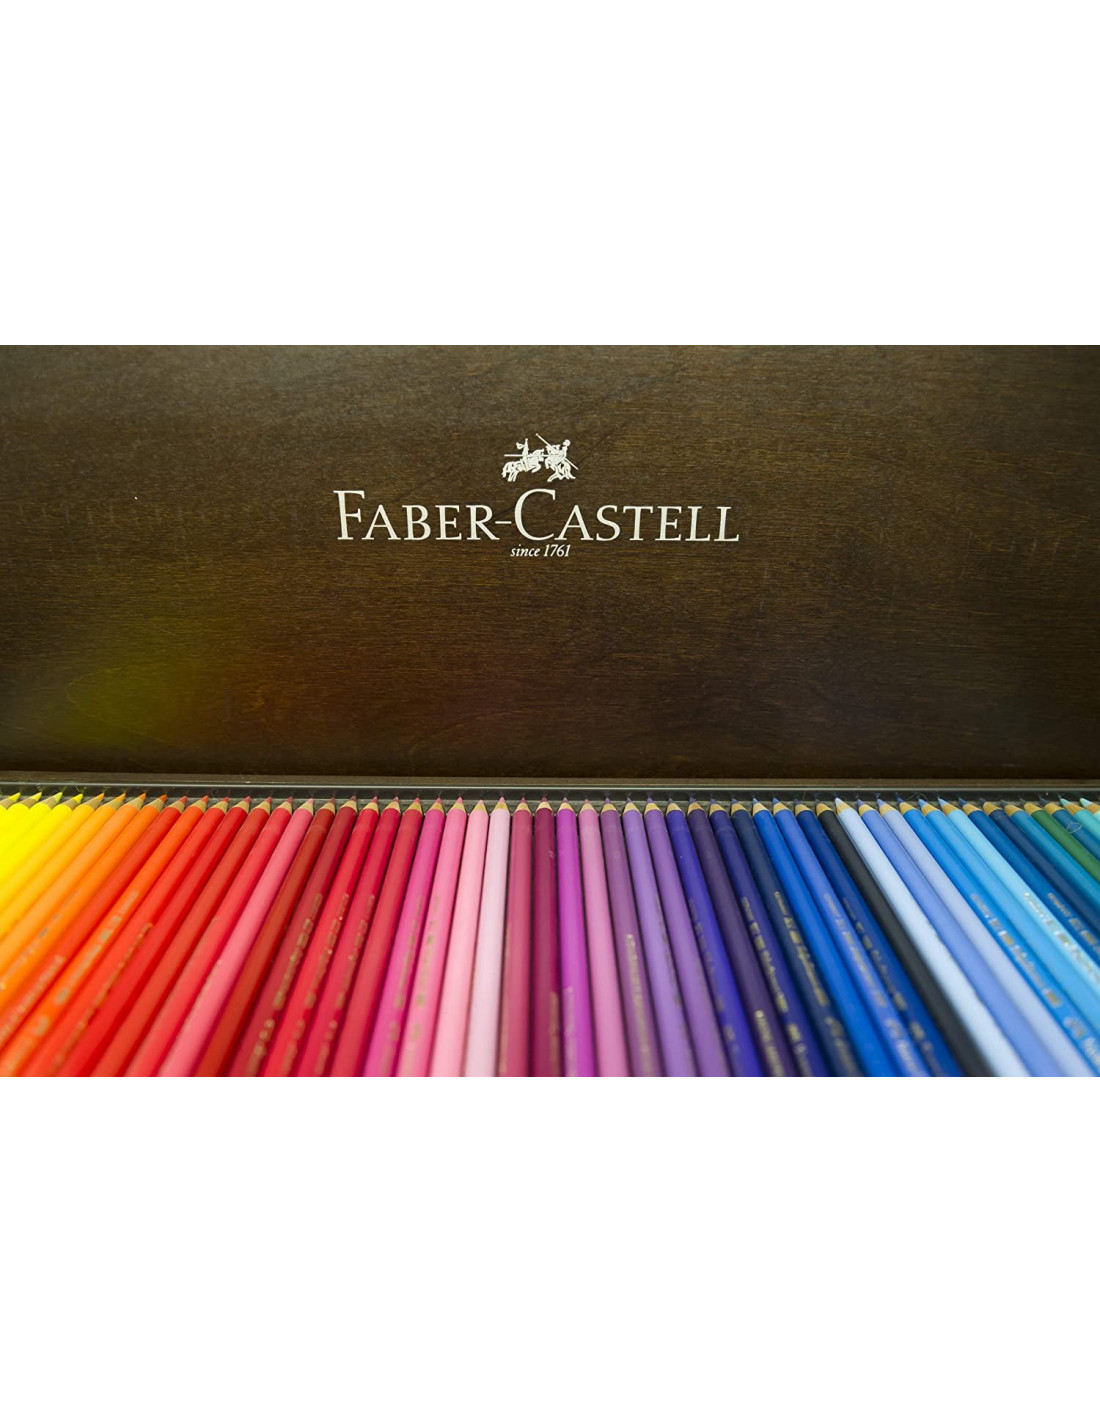 Estuche de madera con 120 lápices de color Polychromos